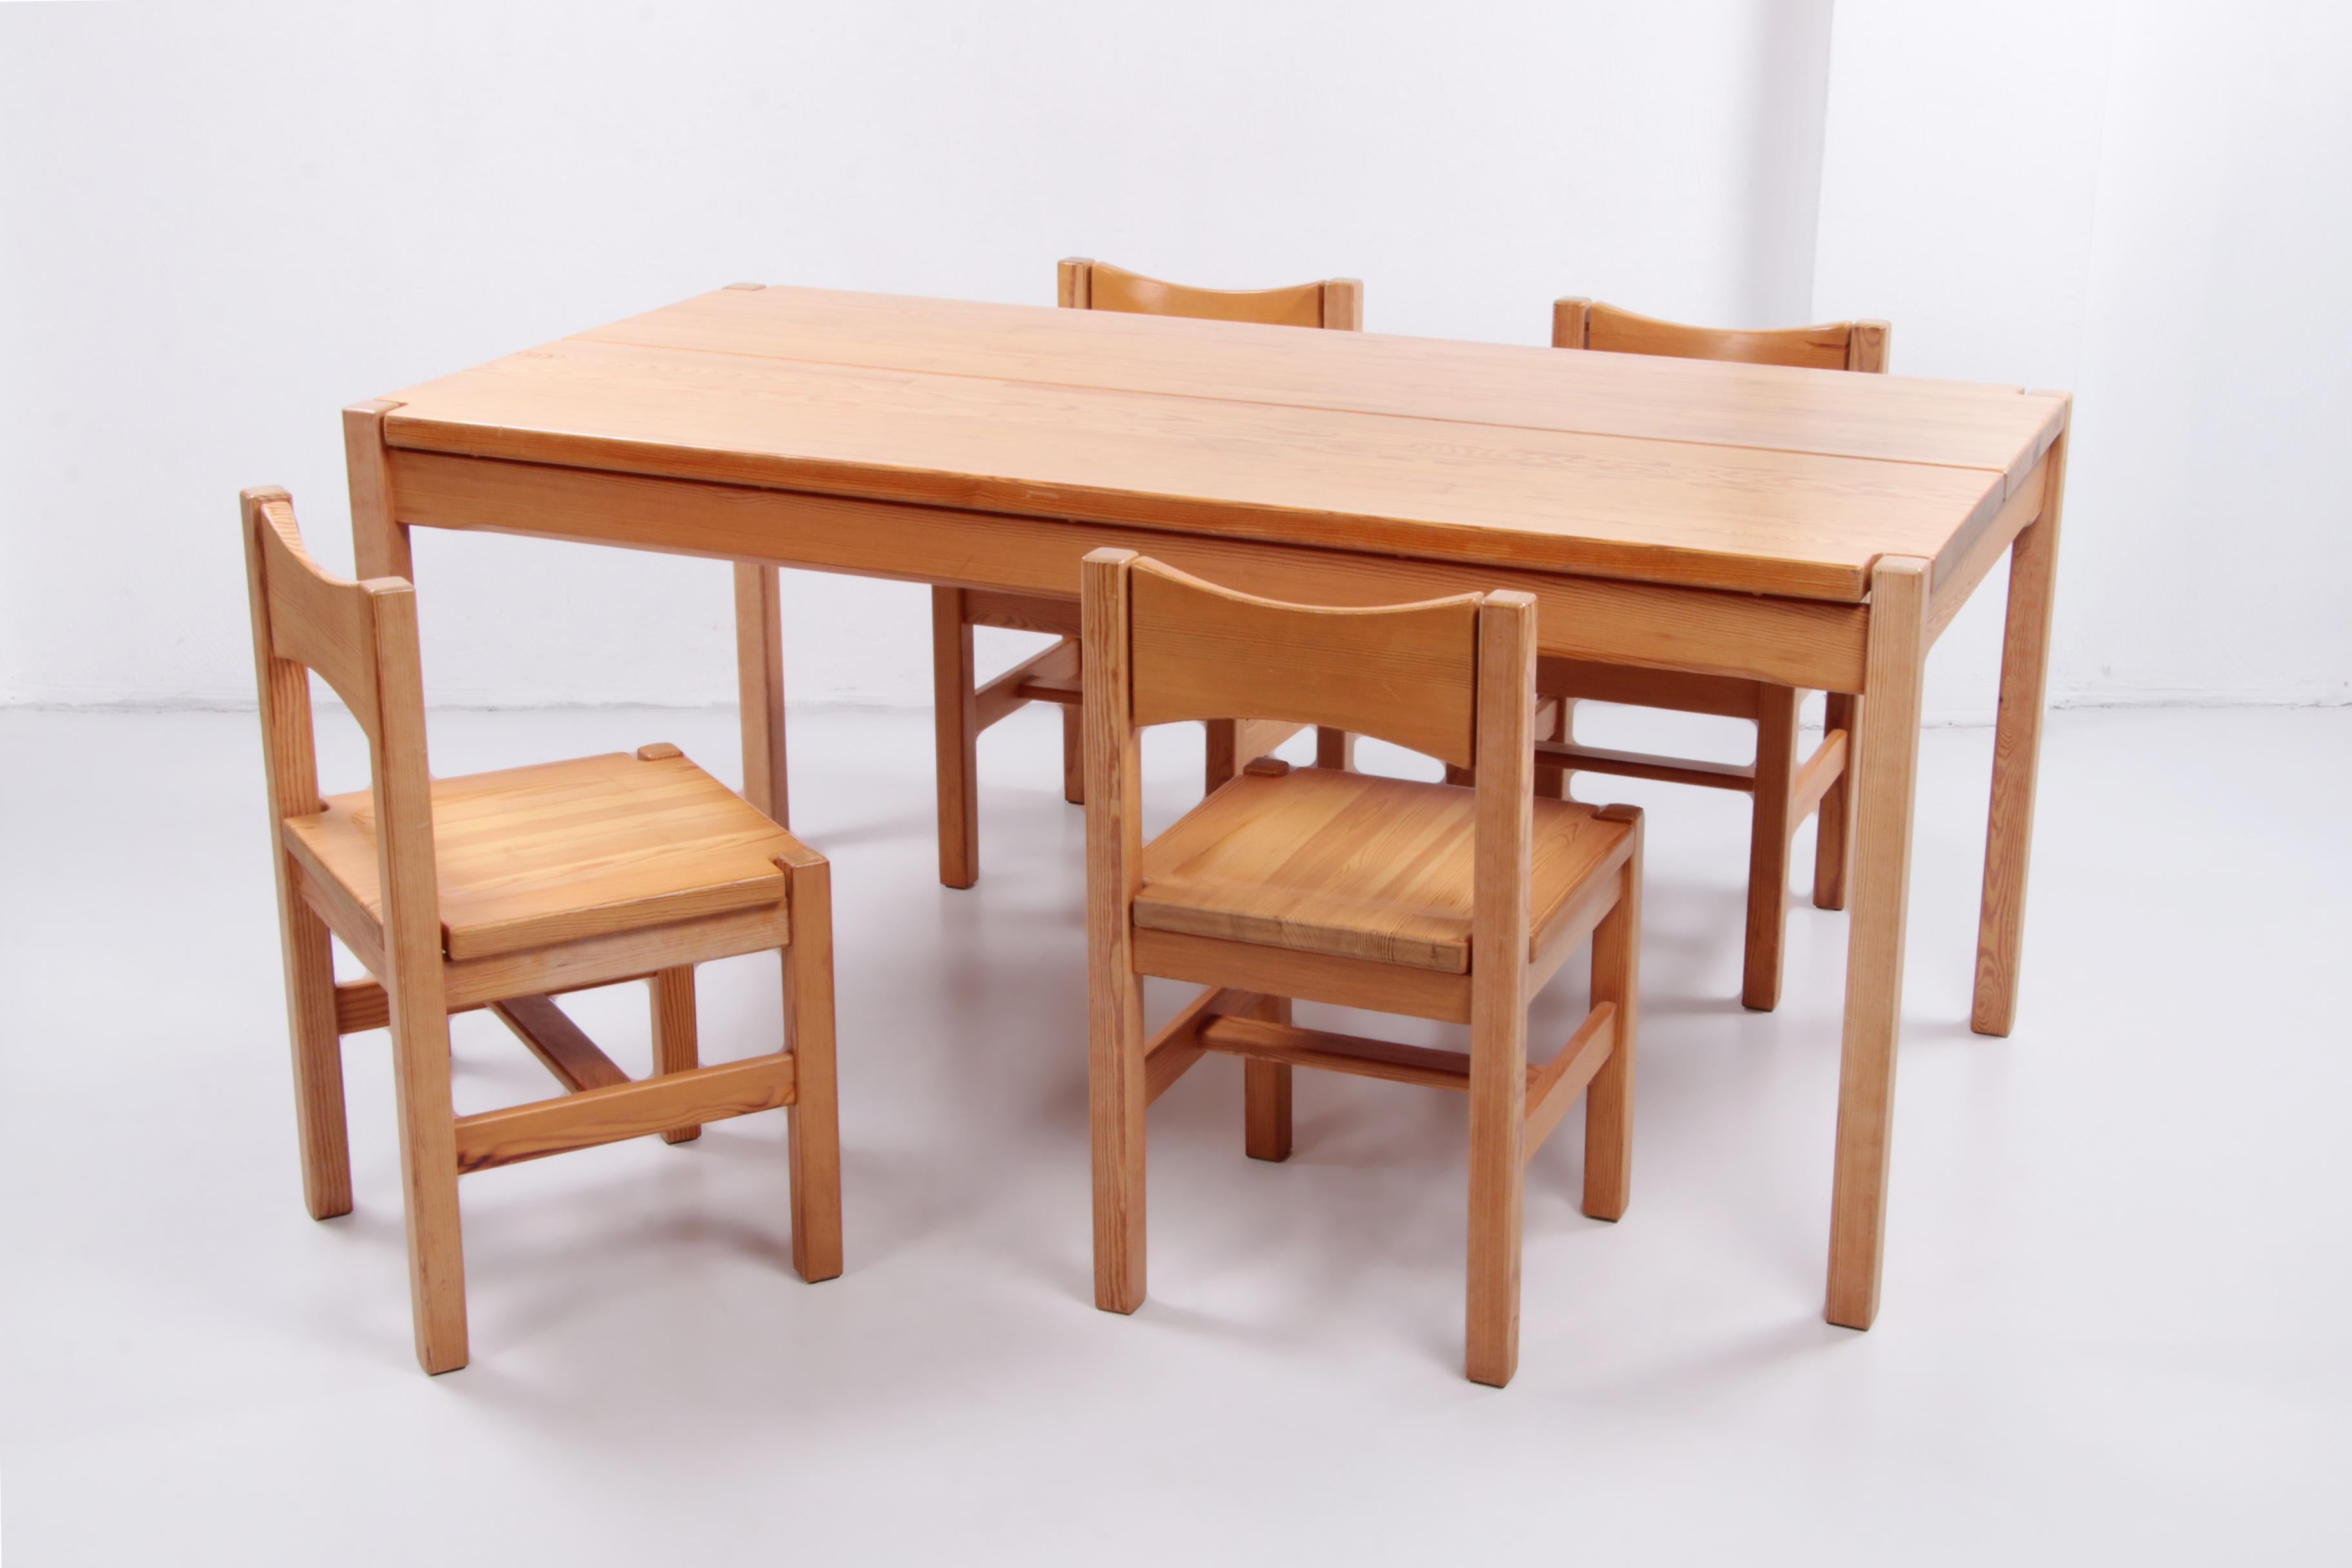 Finnish Ilmari Tapiovaara Dining Table with 4 Chairs for Laukaan Pu, 1963